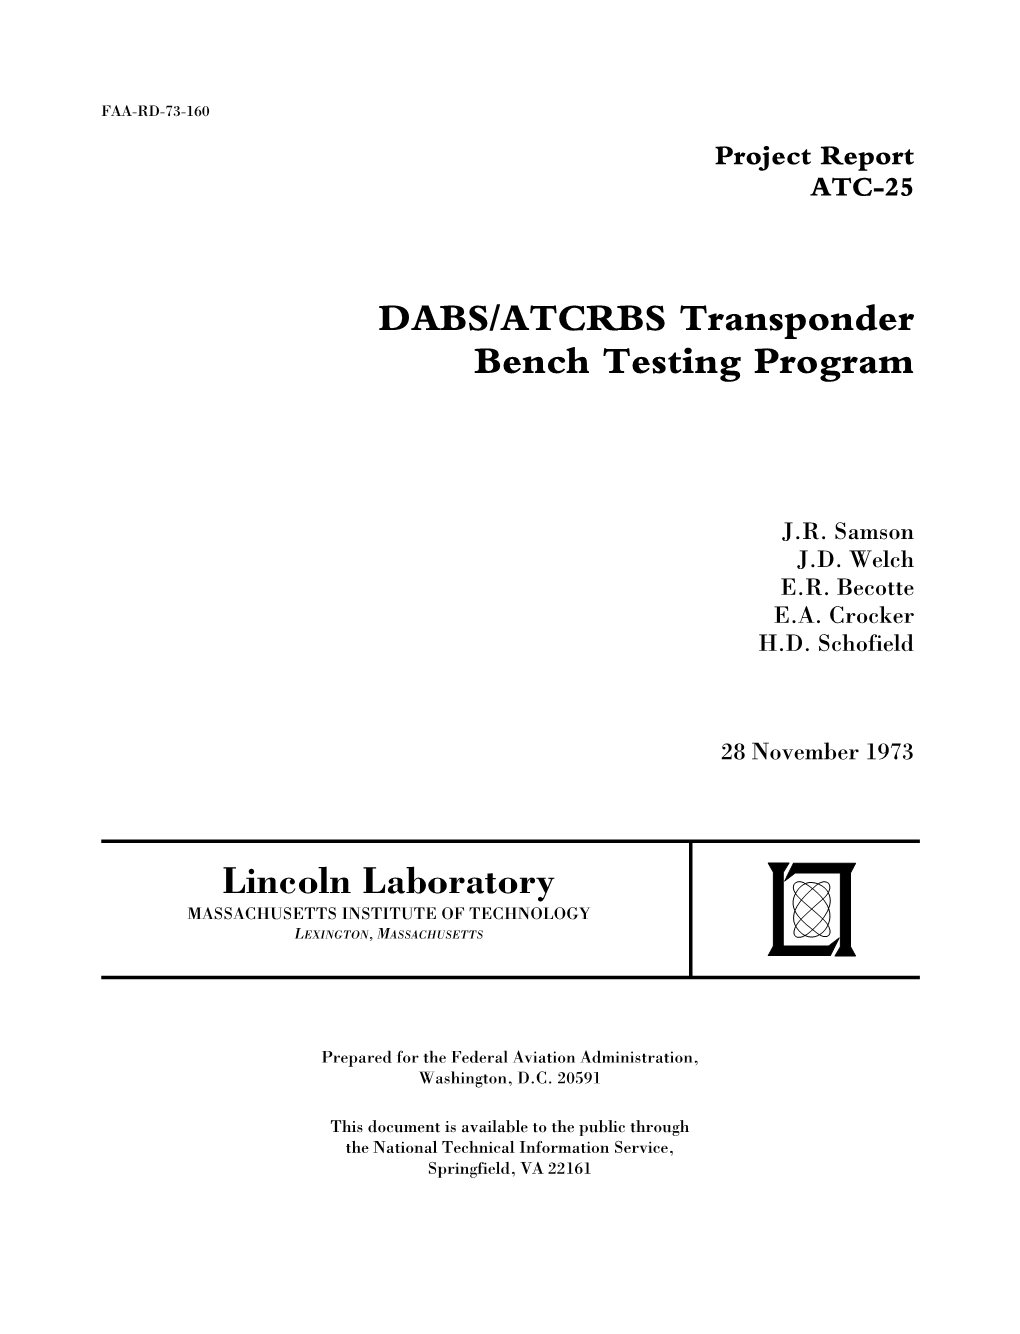 DABS/ATCRBS Transponder Bench Test Program